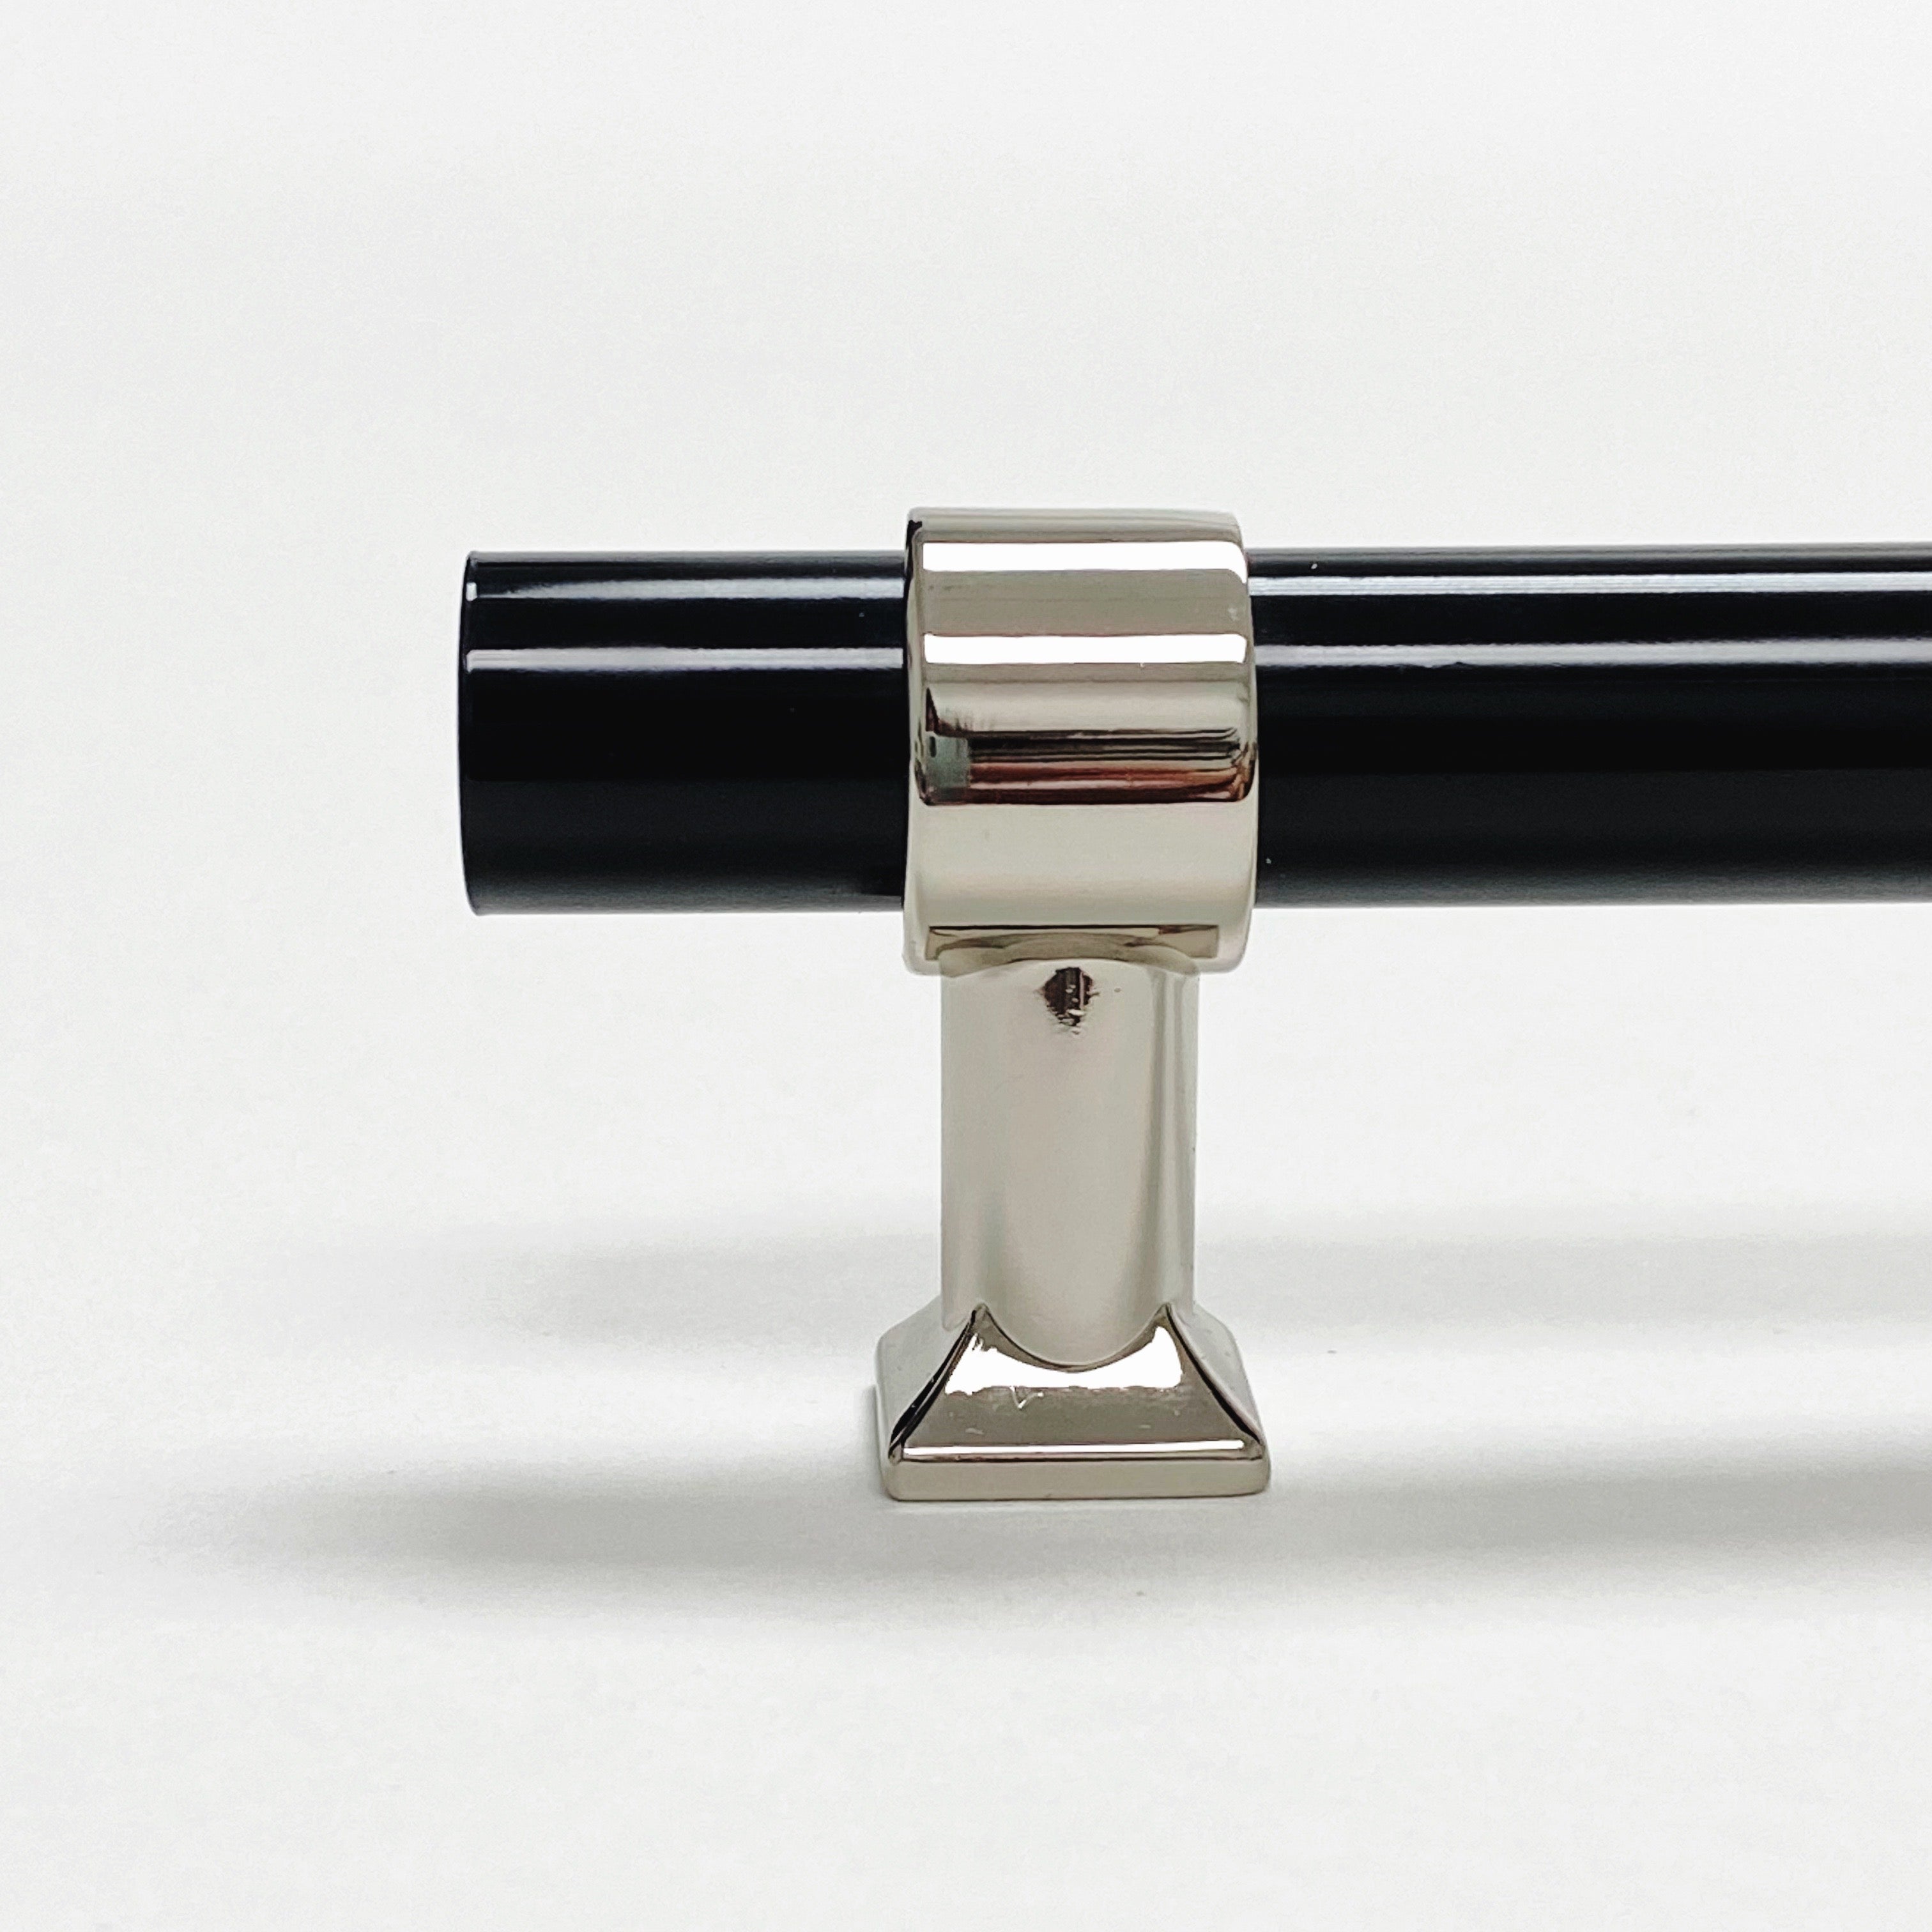 Black Lucite Polished Nickel "Nash" Drawer Pulls and Cabinet Knobs - Forge Hardware Studio